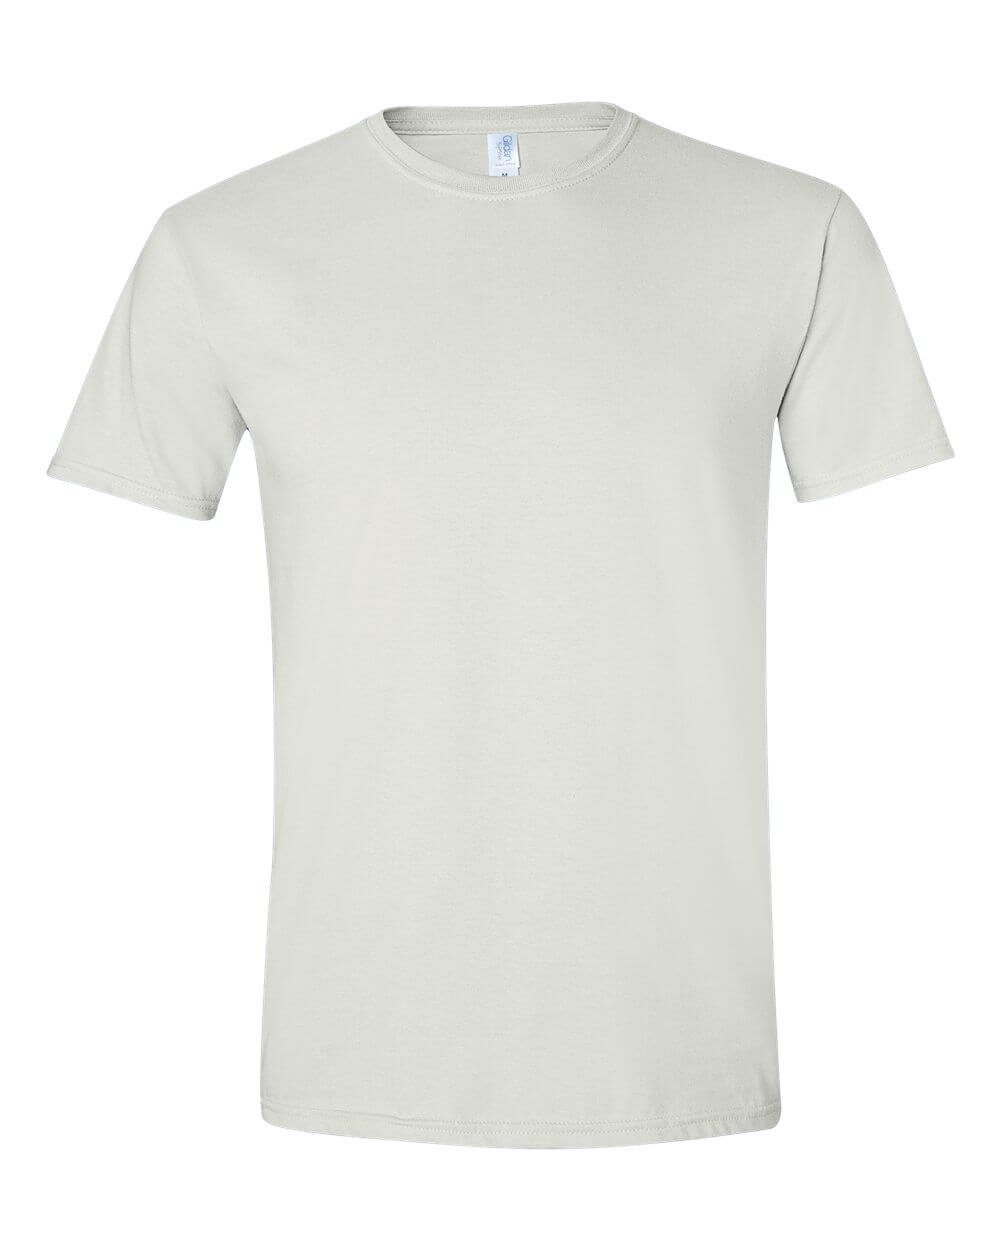 https://pstyletienda.com/wp-content/uploads/2021/11/Camiseta-Hombre-Blanco-algodon-peinado-Gildan-64000-2.jpg